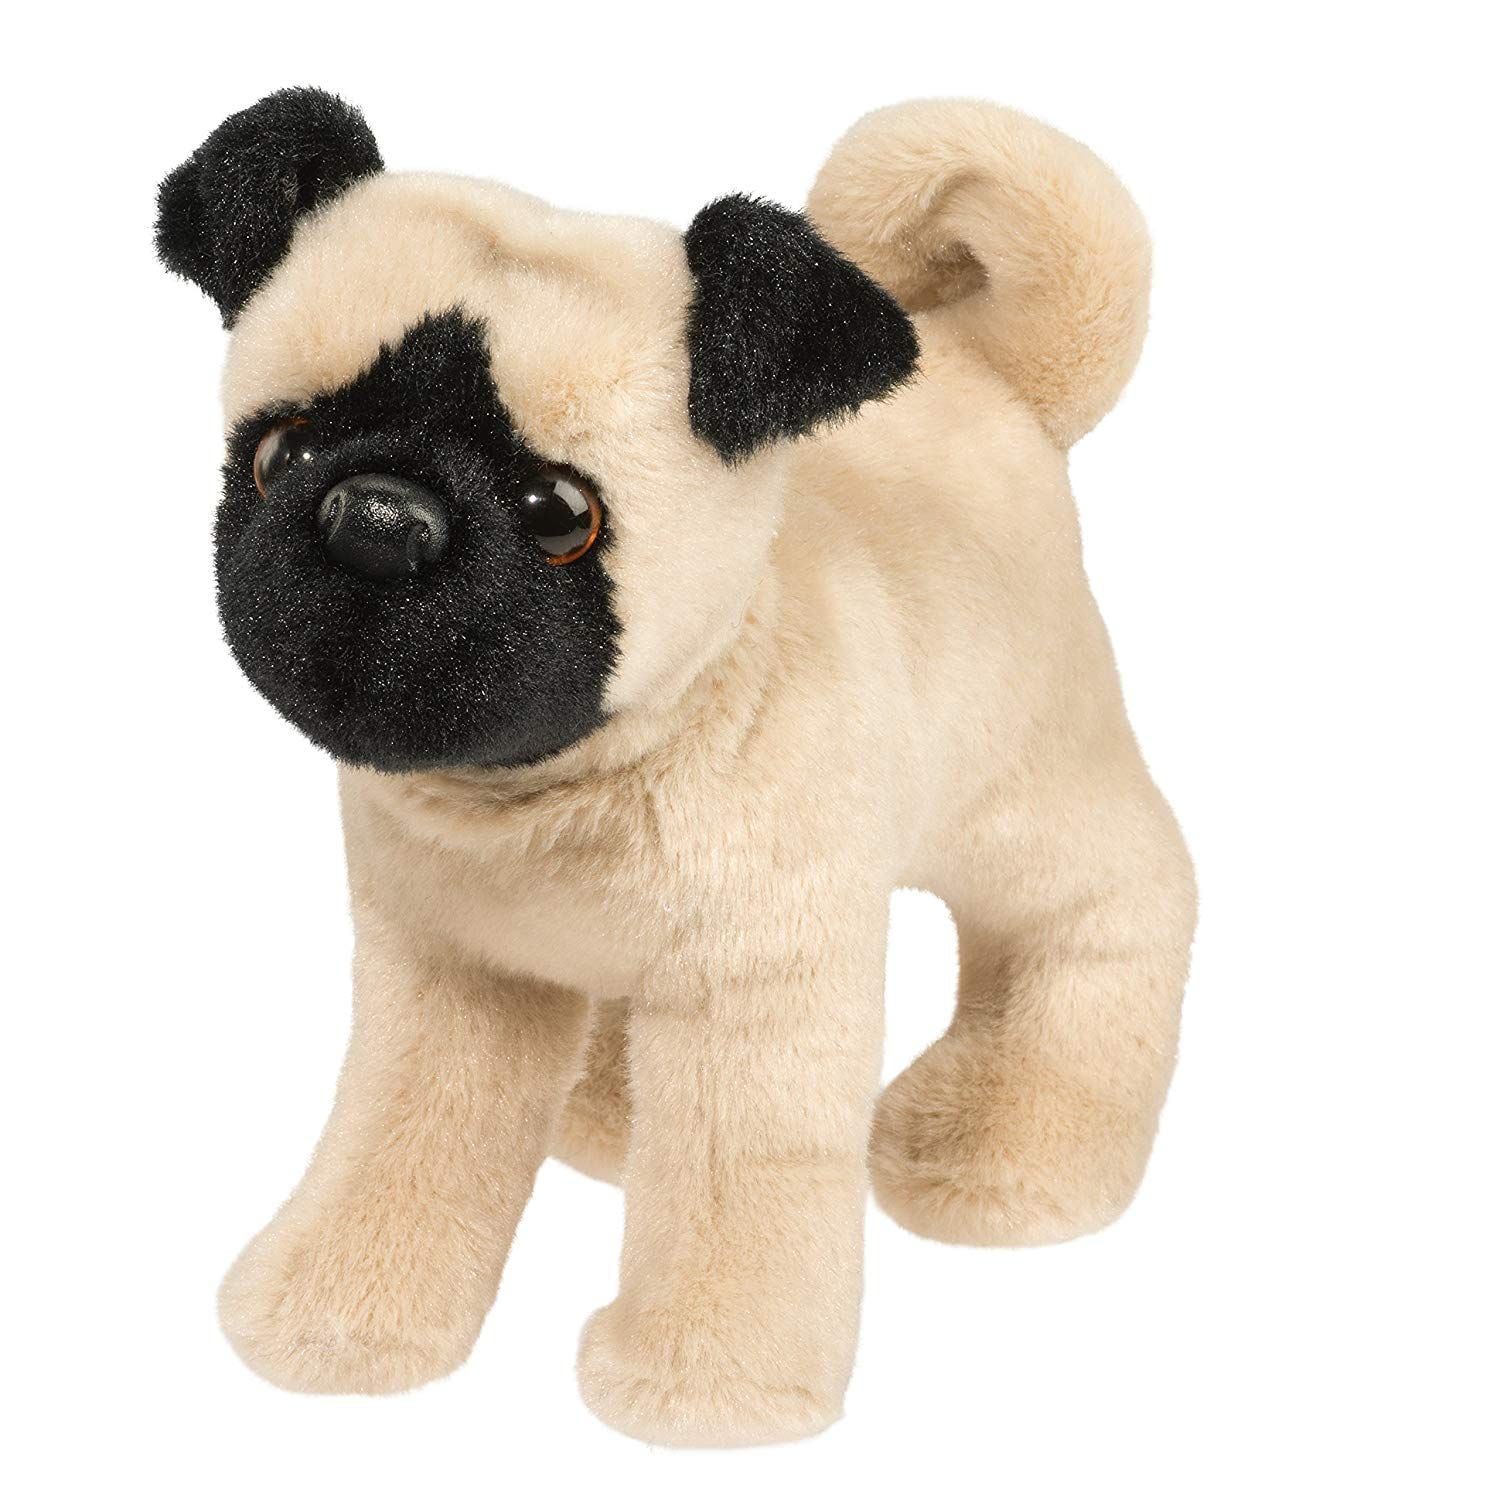 DolliBu Sitting Pug Stuffed Animal Dog Plush Toy Huggable Cuddle Puppy 8 Inch 